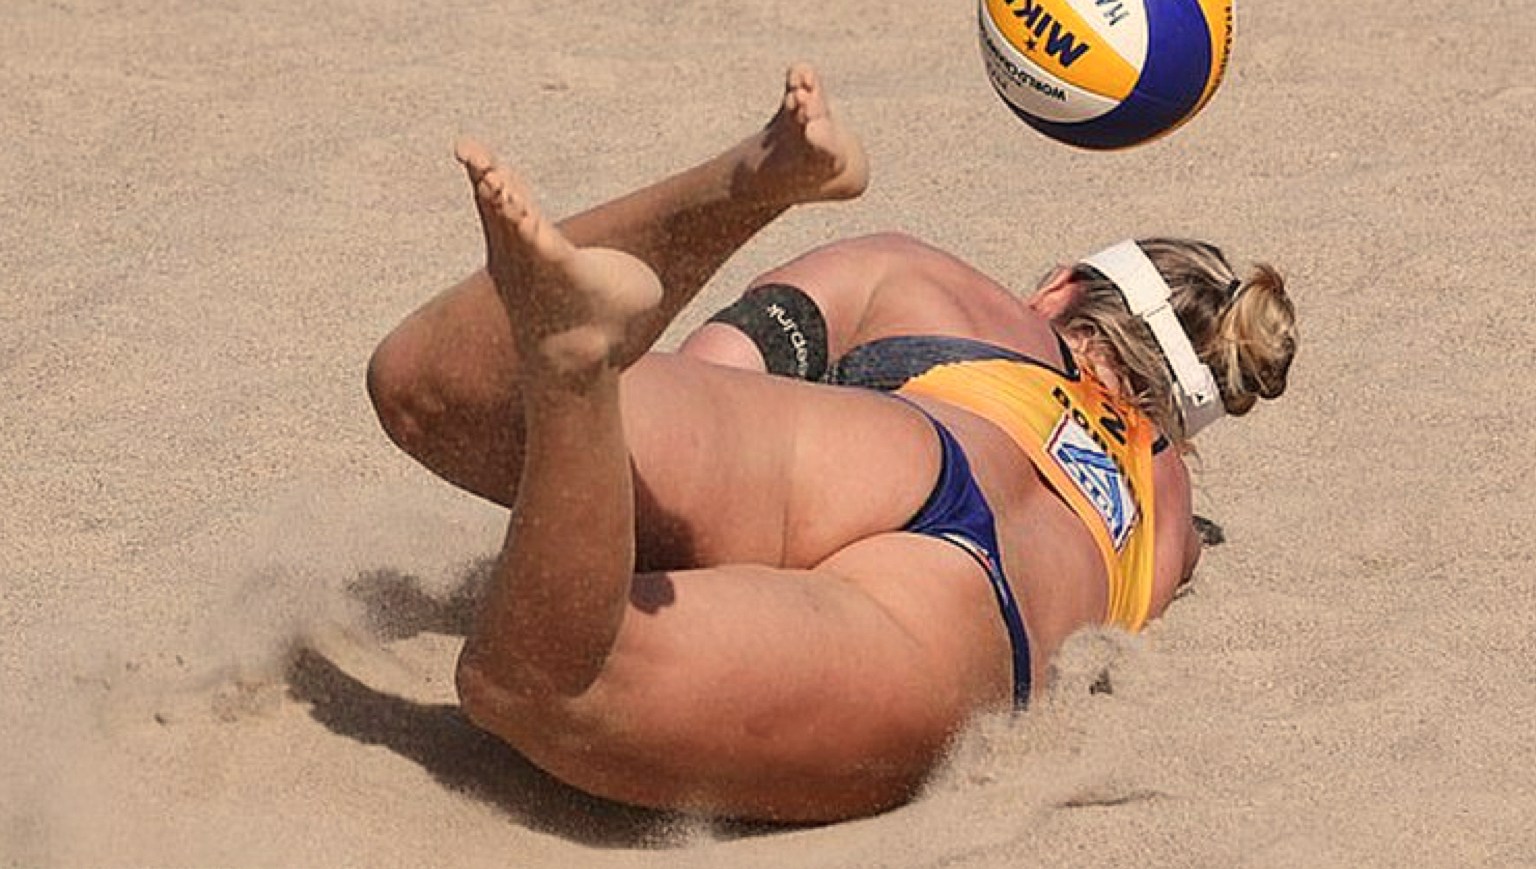 Naked Beach Volleyball Bikini - Fucked a Volley Ball Player on the Beach (64 photos) - motherless porn pics